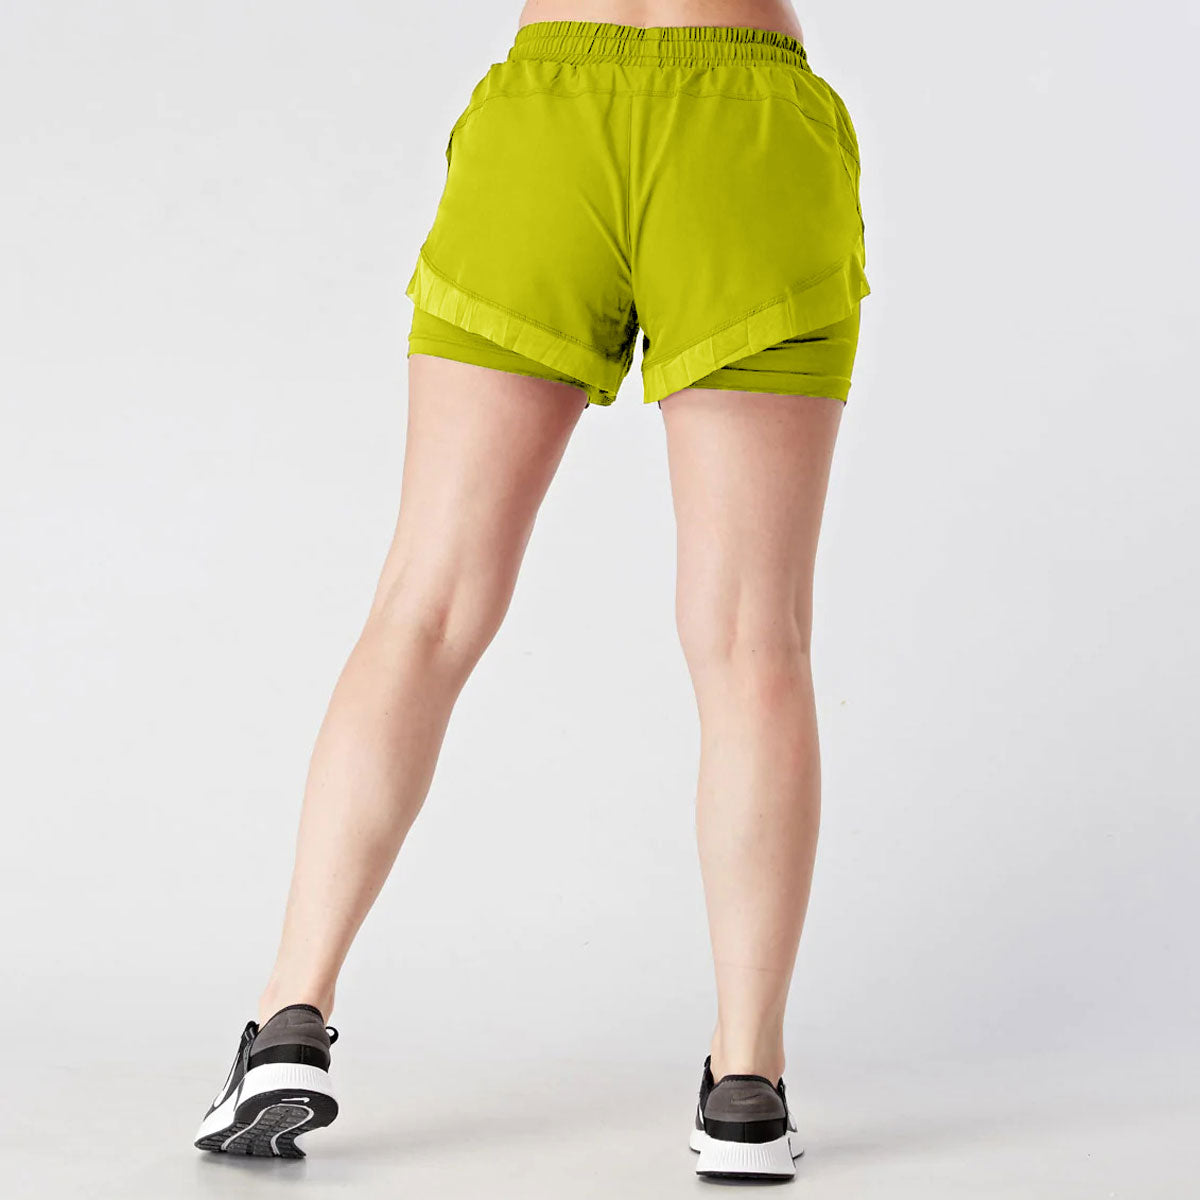 RONEX Women's Compression Mesh Liner Shorts